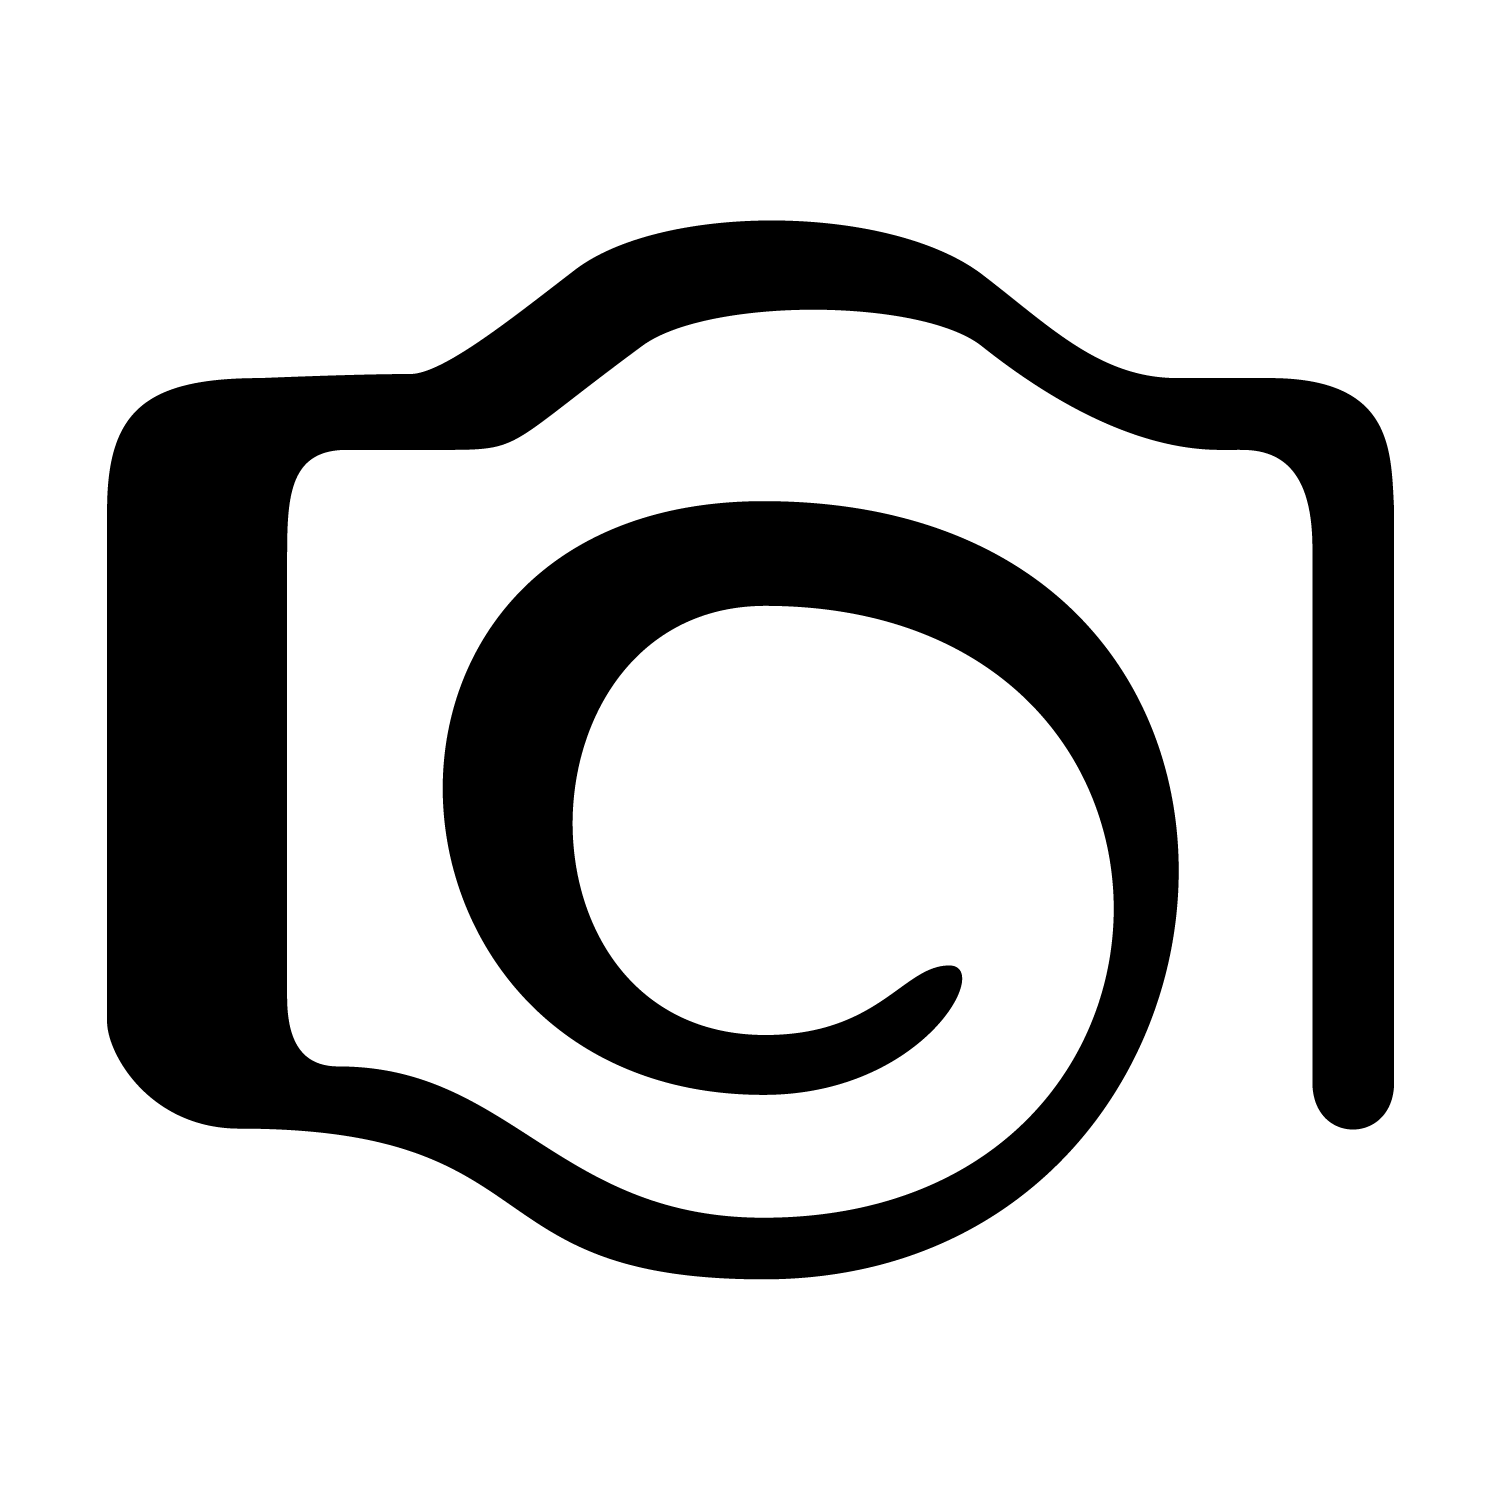 Logo Kamera Png - Cameras Icon #341984 - Free Icons Library / Den ...